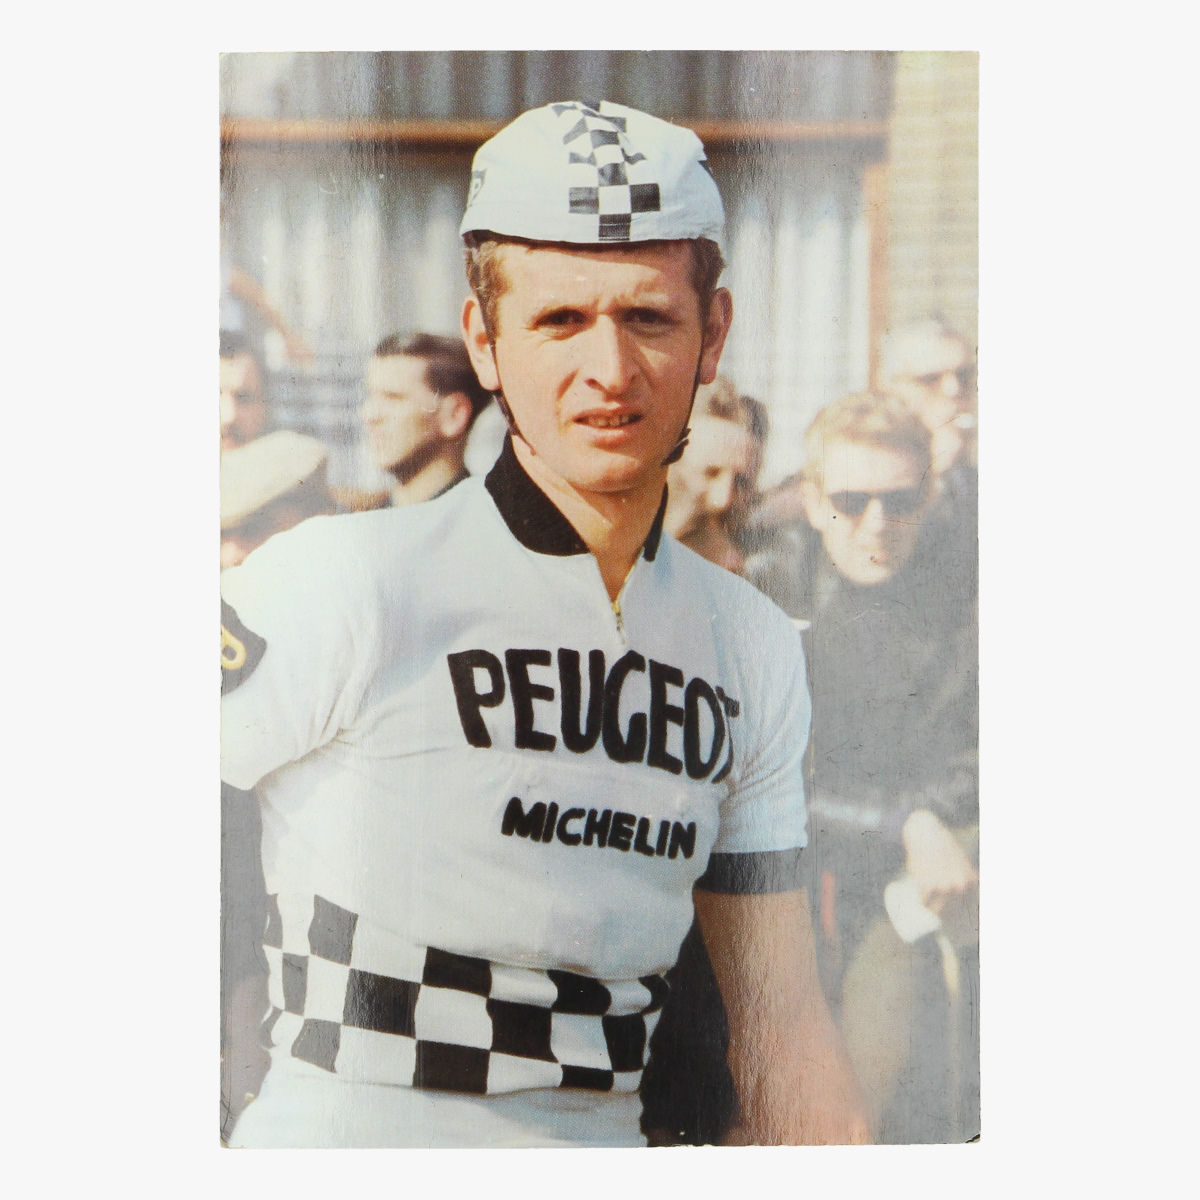 Afbeeldingen van oude postkaart wielrennen bracke